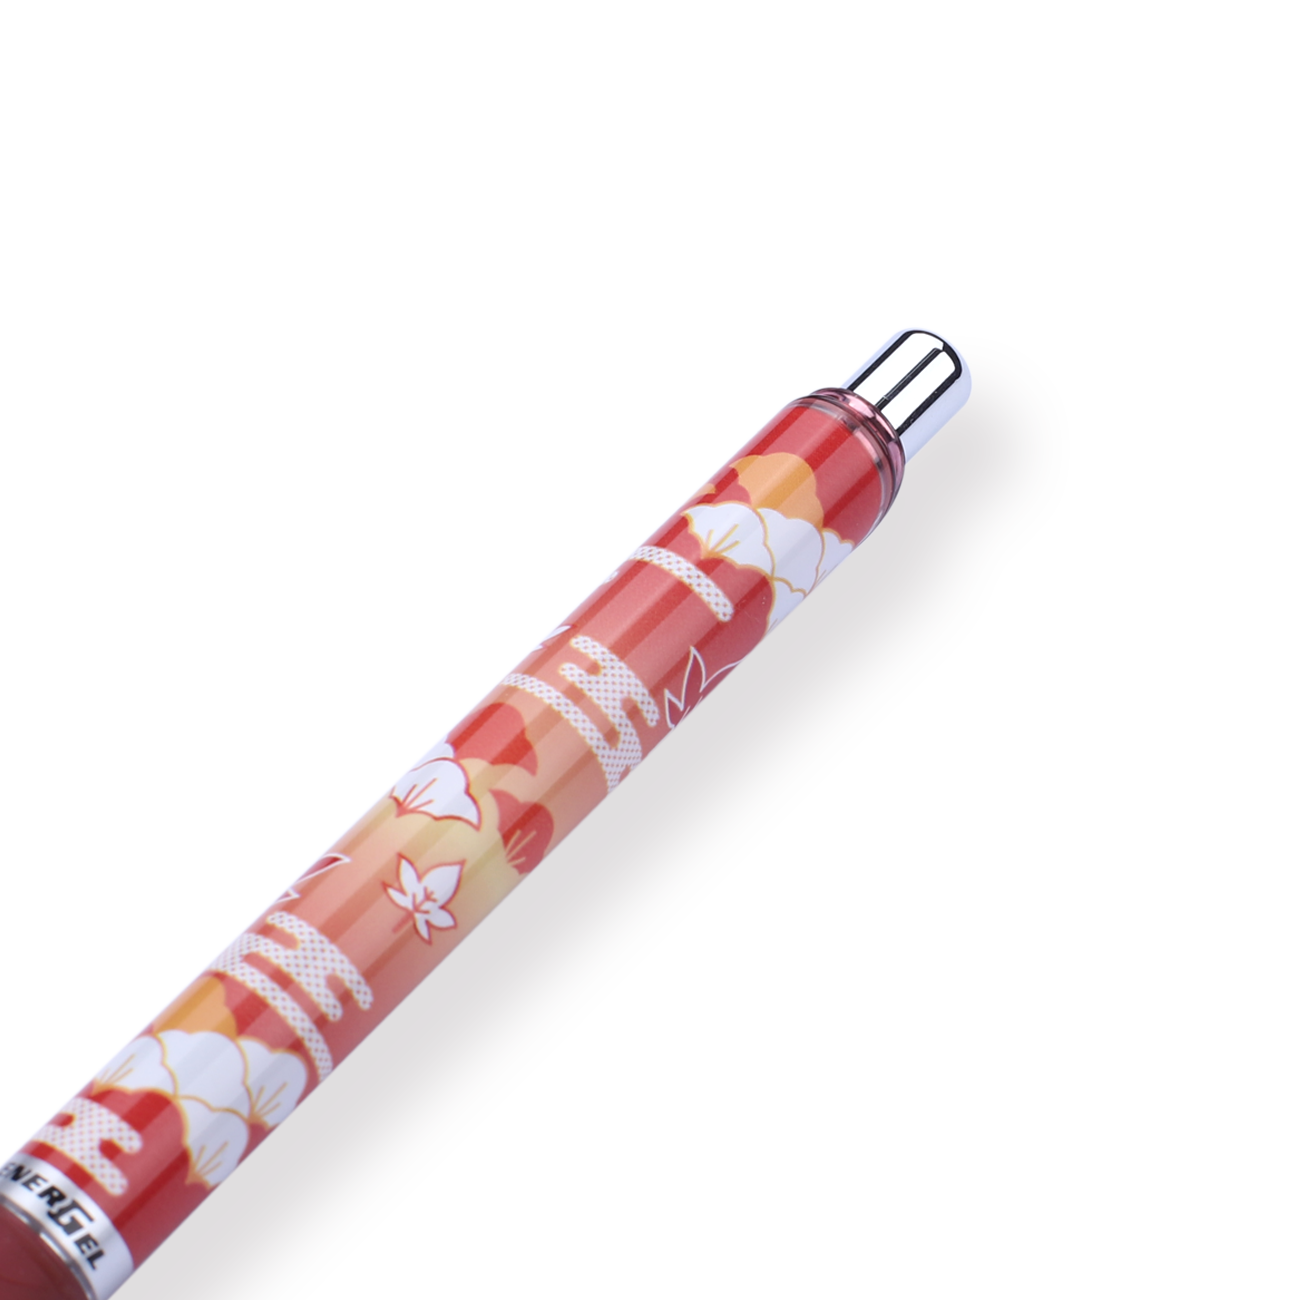 Pentel EnerGel Fall-themed Limited Edition Gel Pen - 0.5 mm - Red Grip